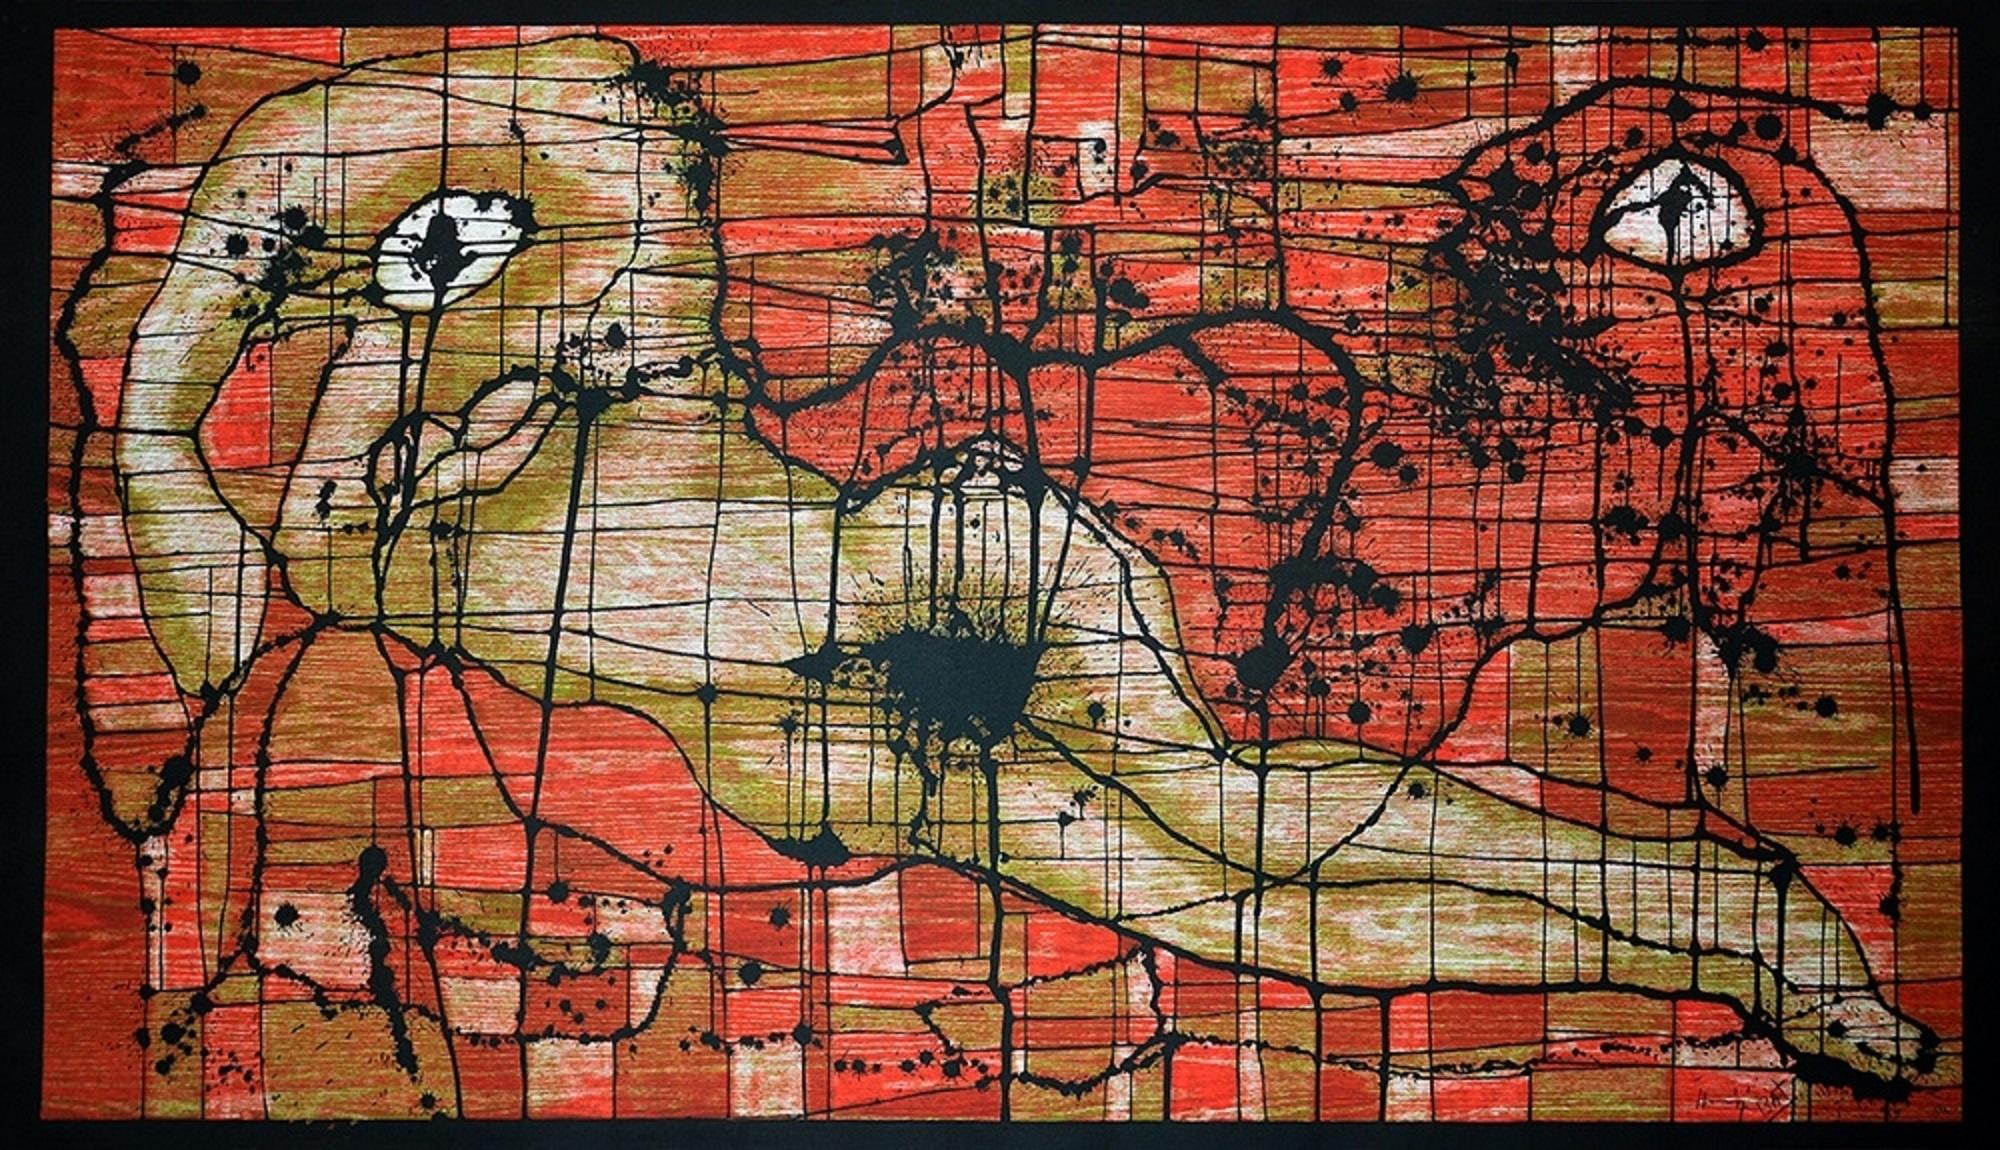 Sergio Hernandez, "La Maja", 2017, Woodcut 87x42in